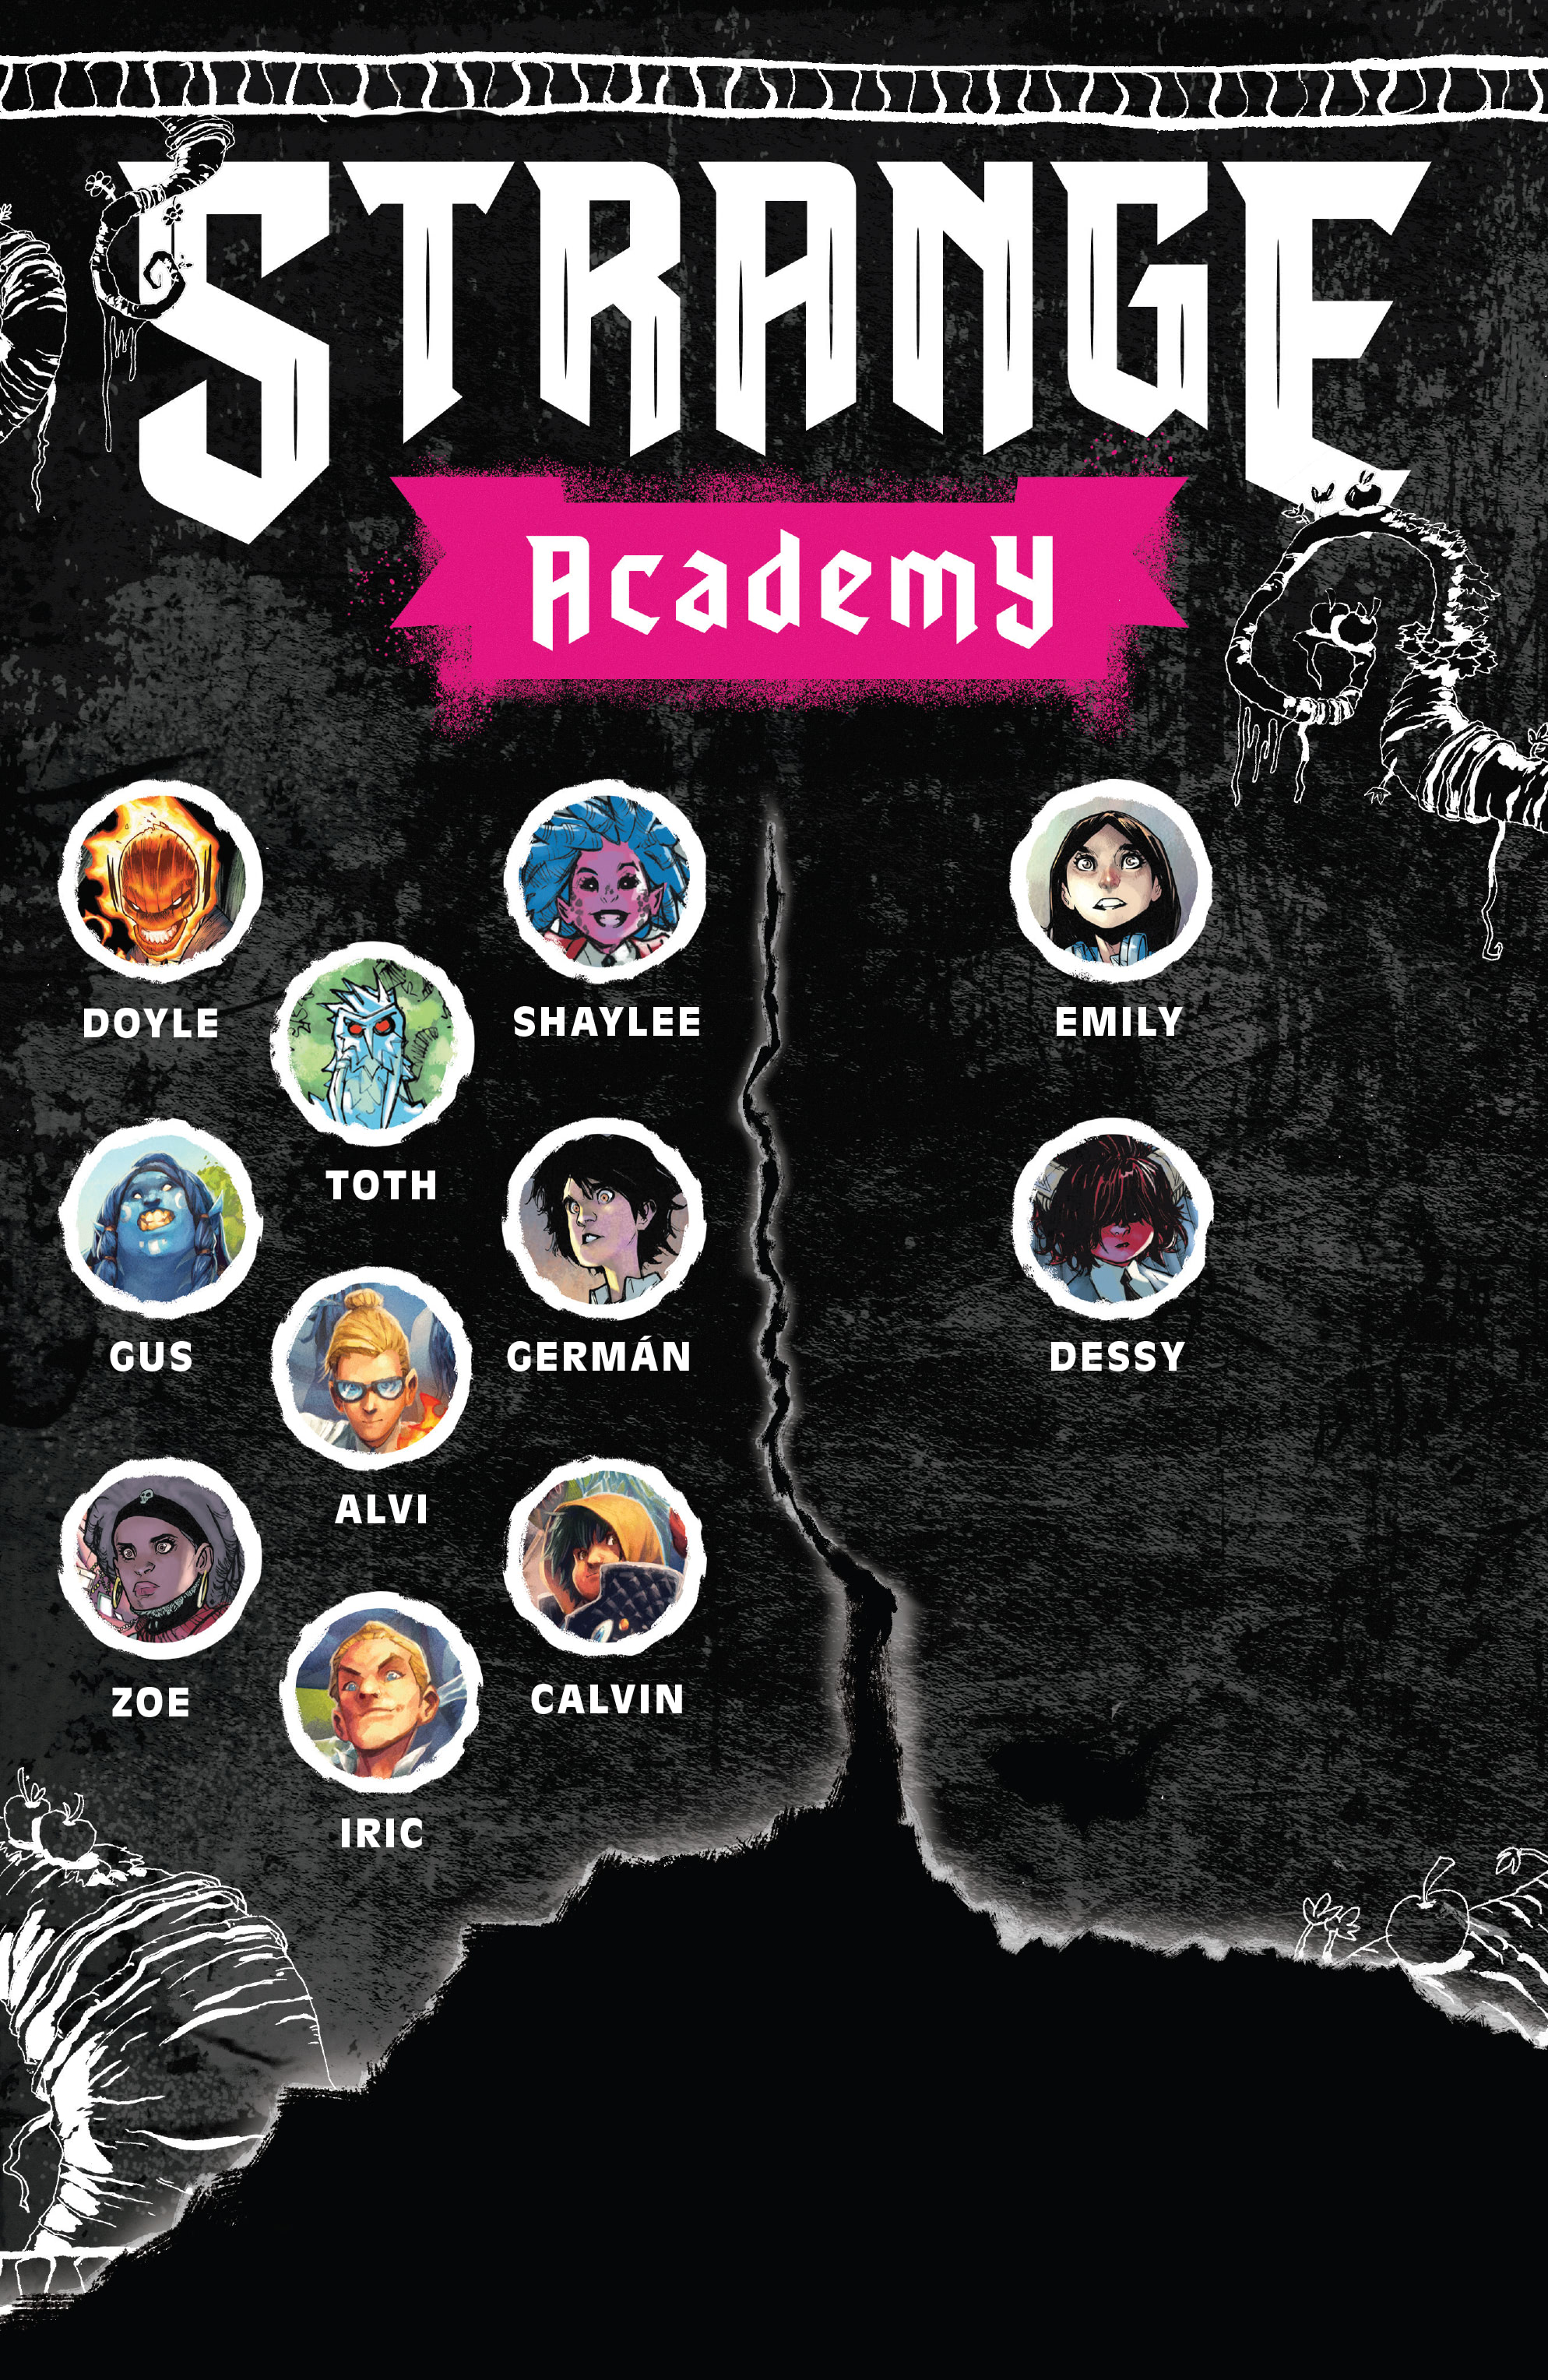 Read online Strange Academy: Finals comic -  Issue #5 - 3